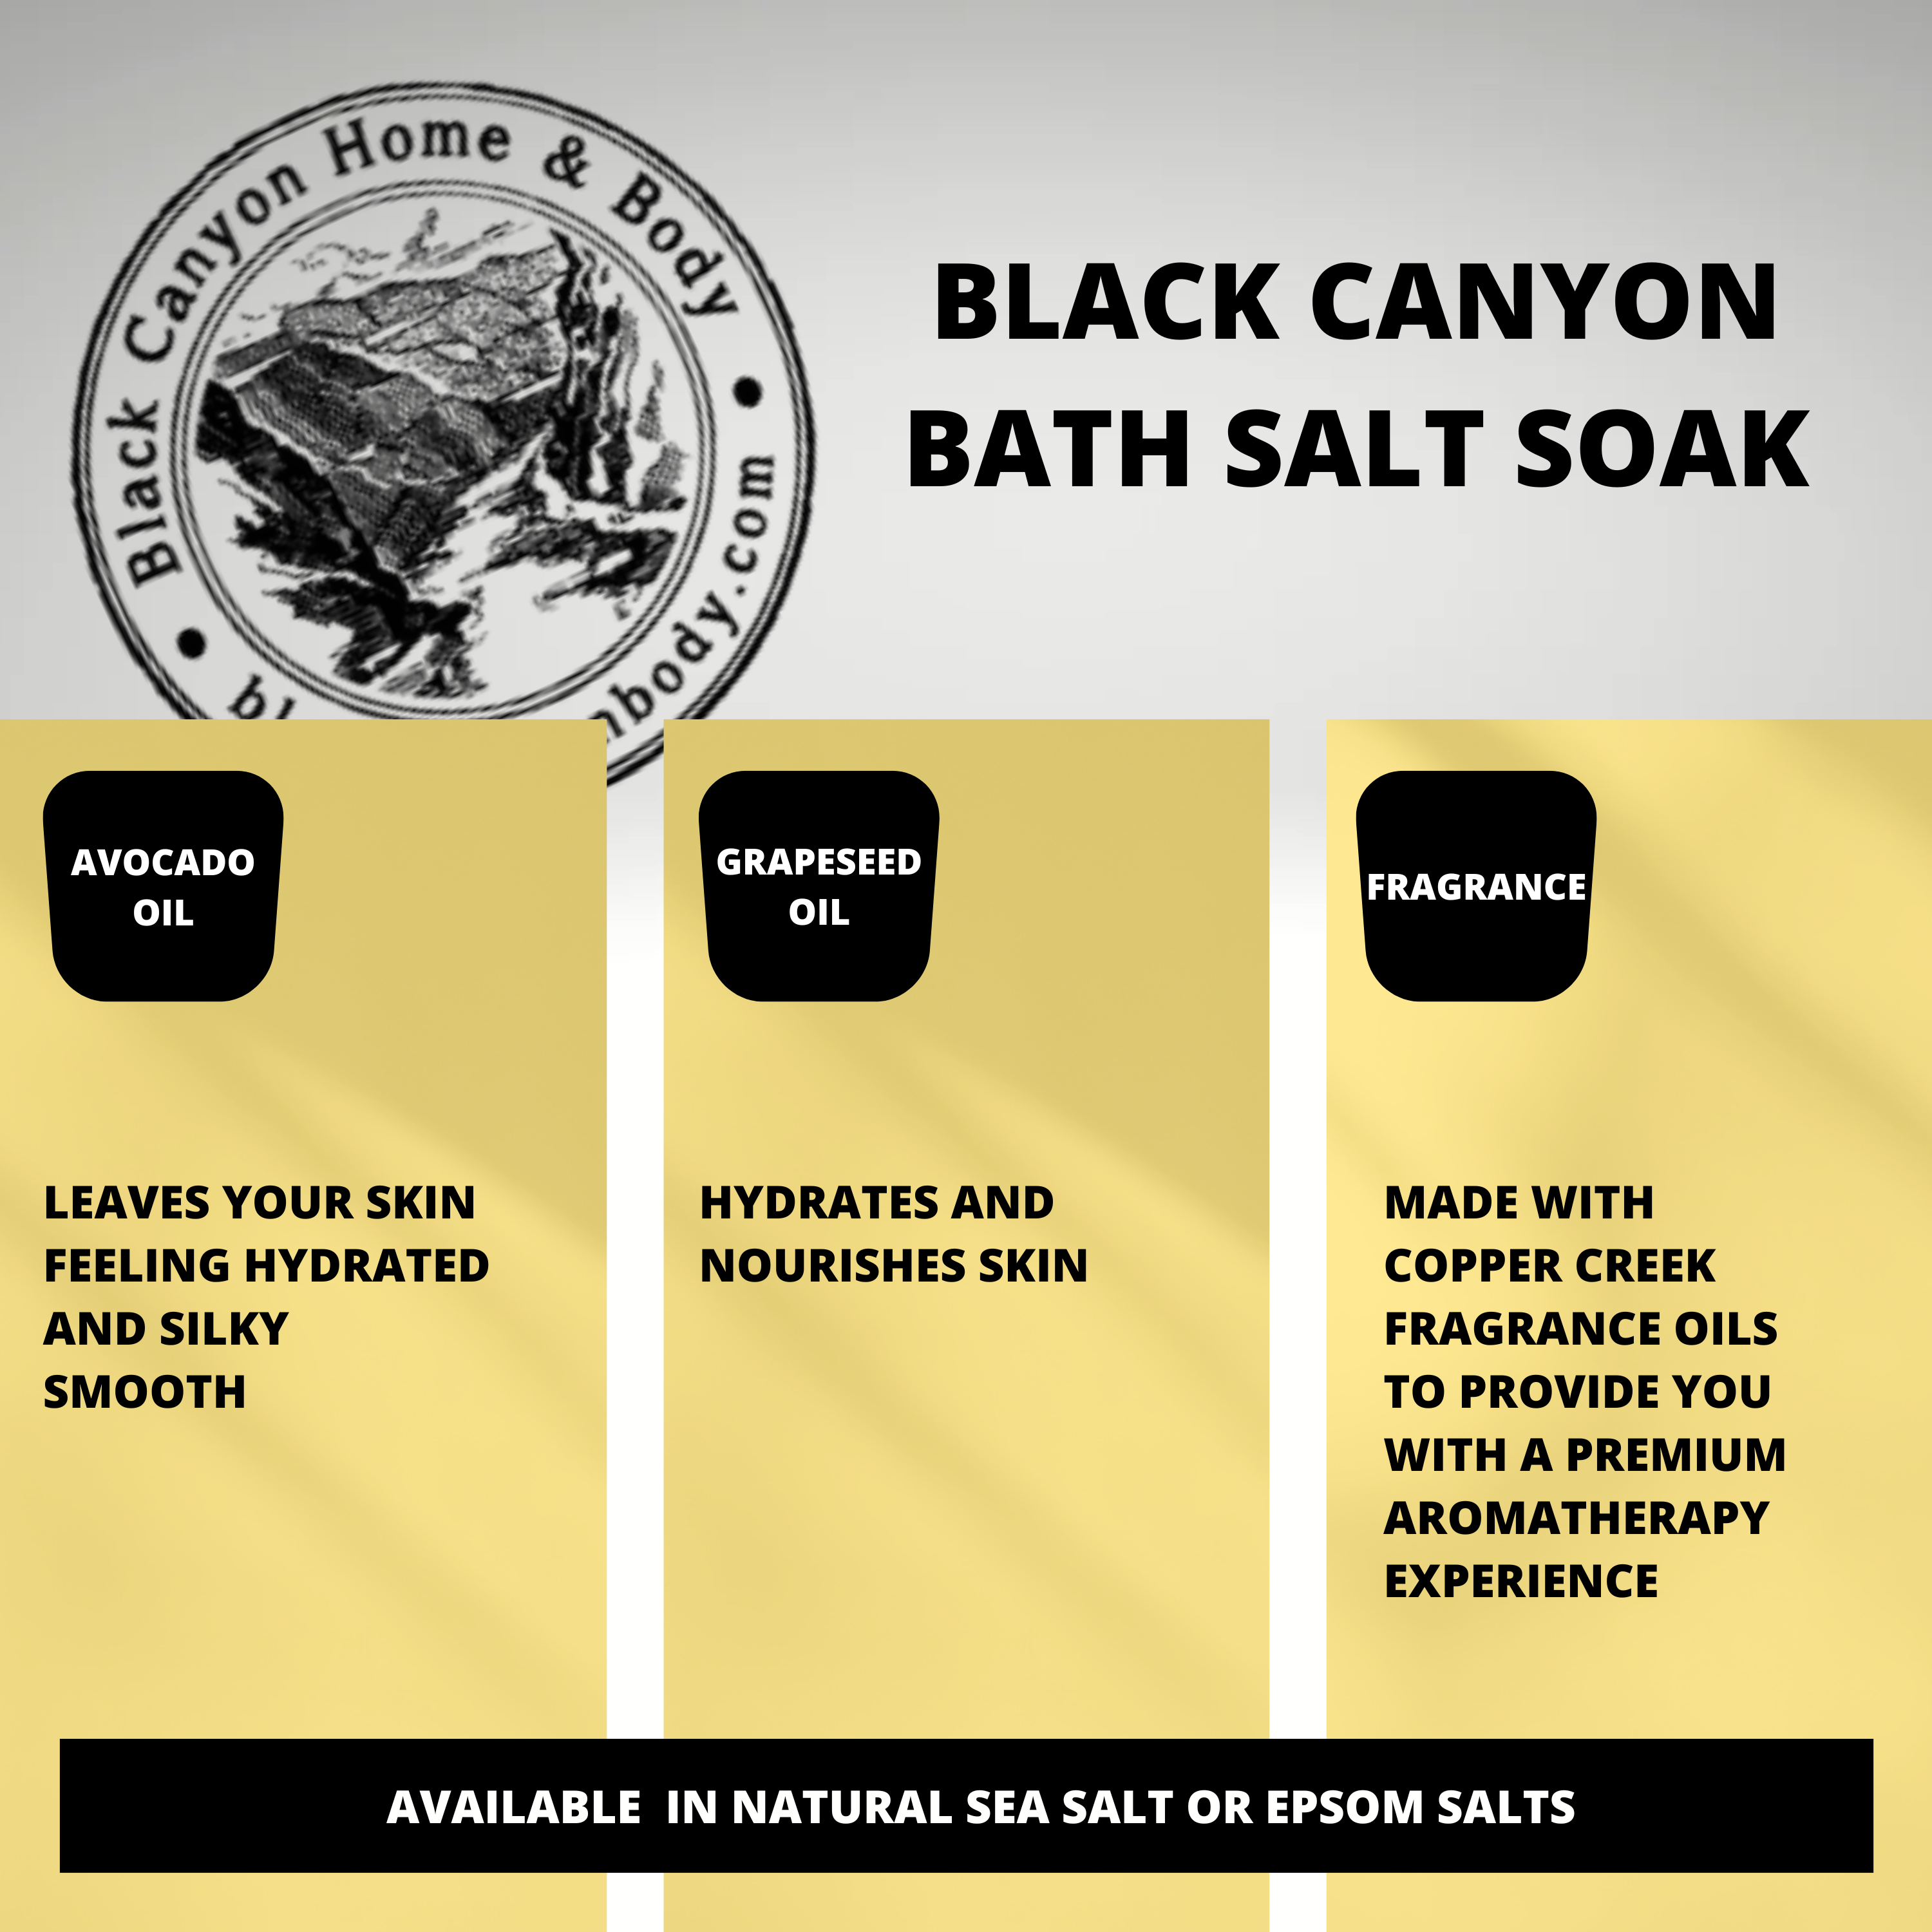 Black Canyon Hot Fudge Brownie Scented Epsom Salt Bath Soak